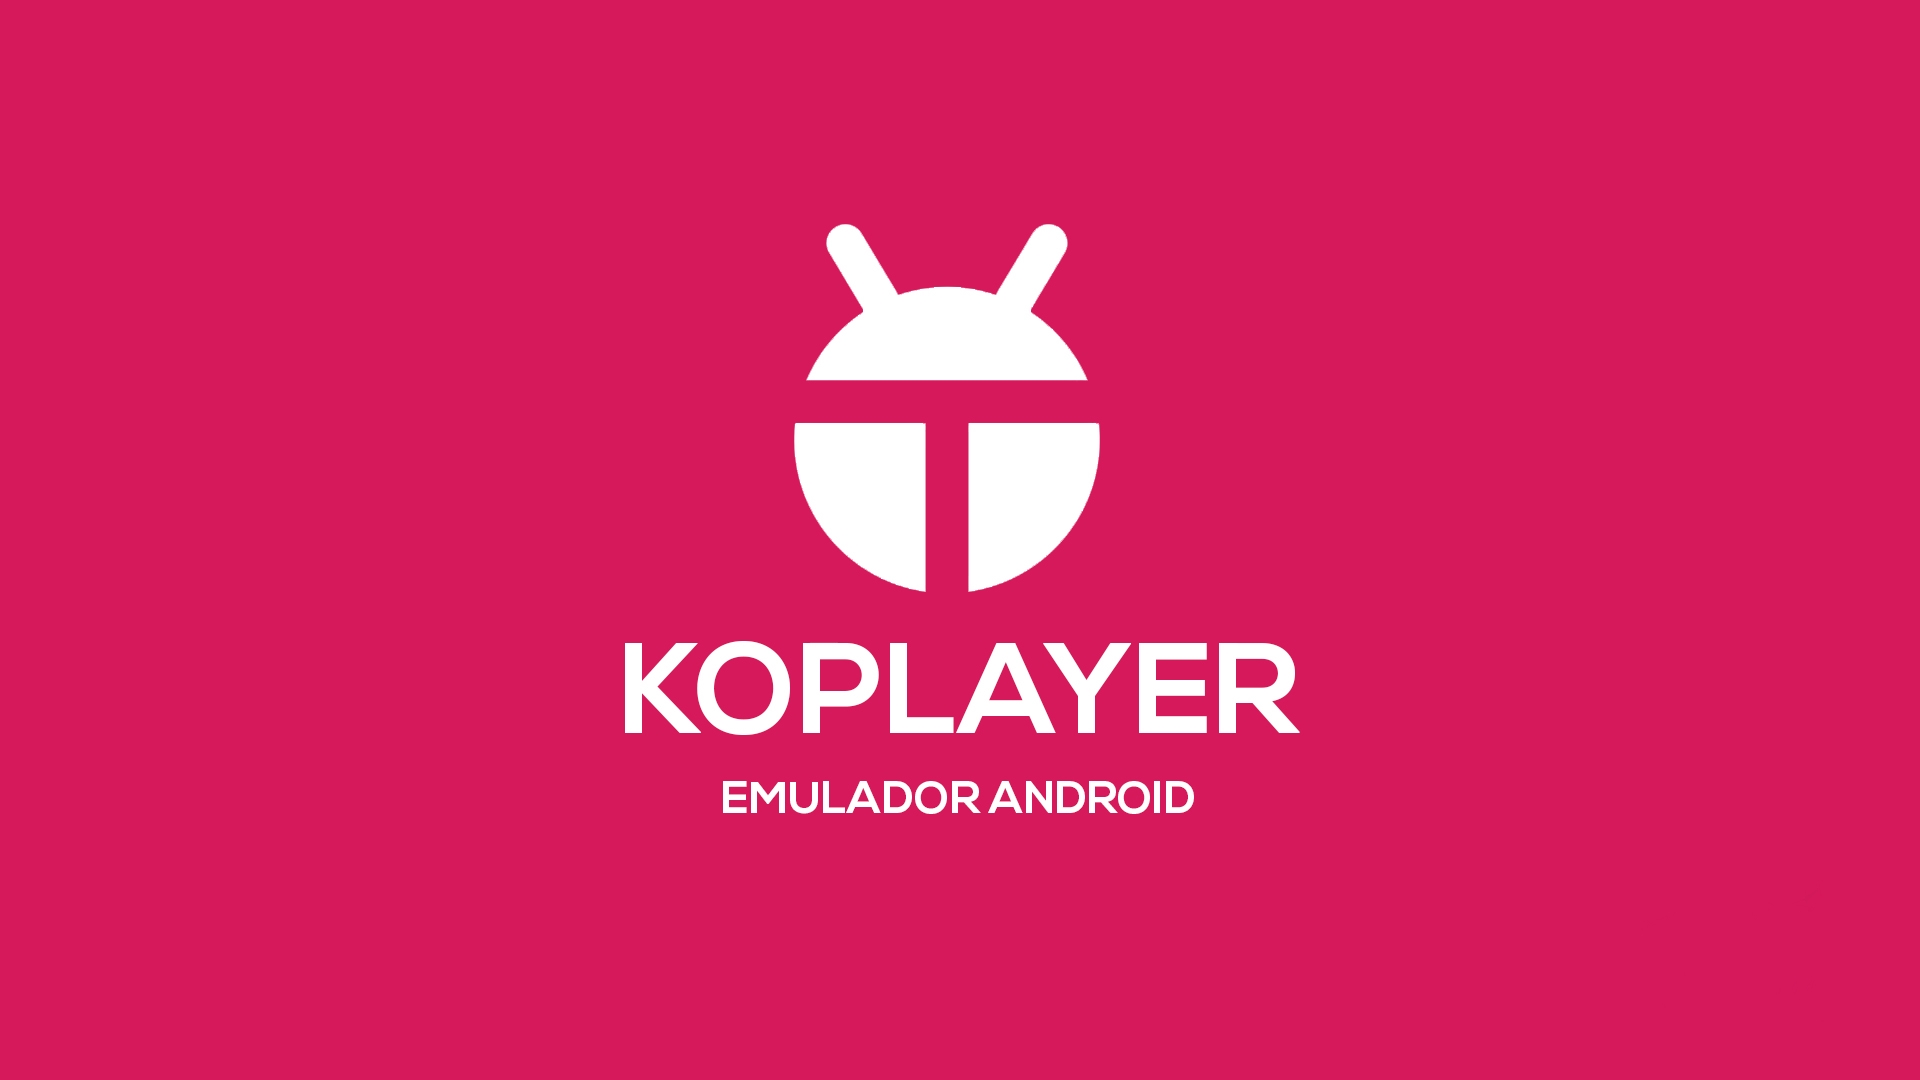 Emulador KoPlayer: Como Baixar e Instalar